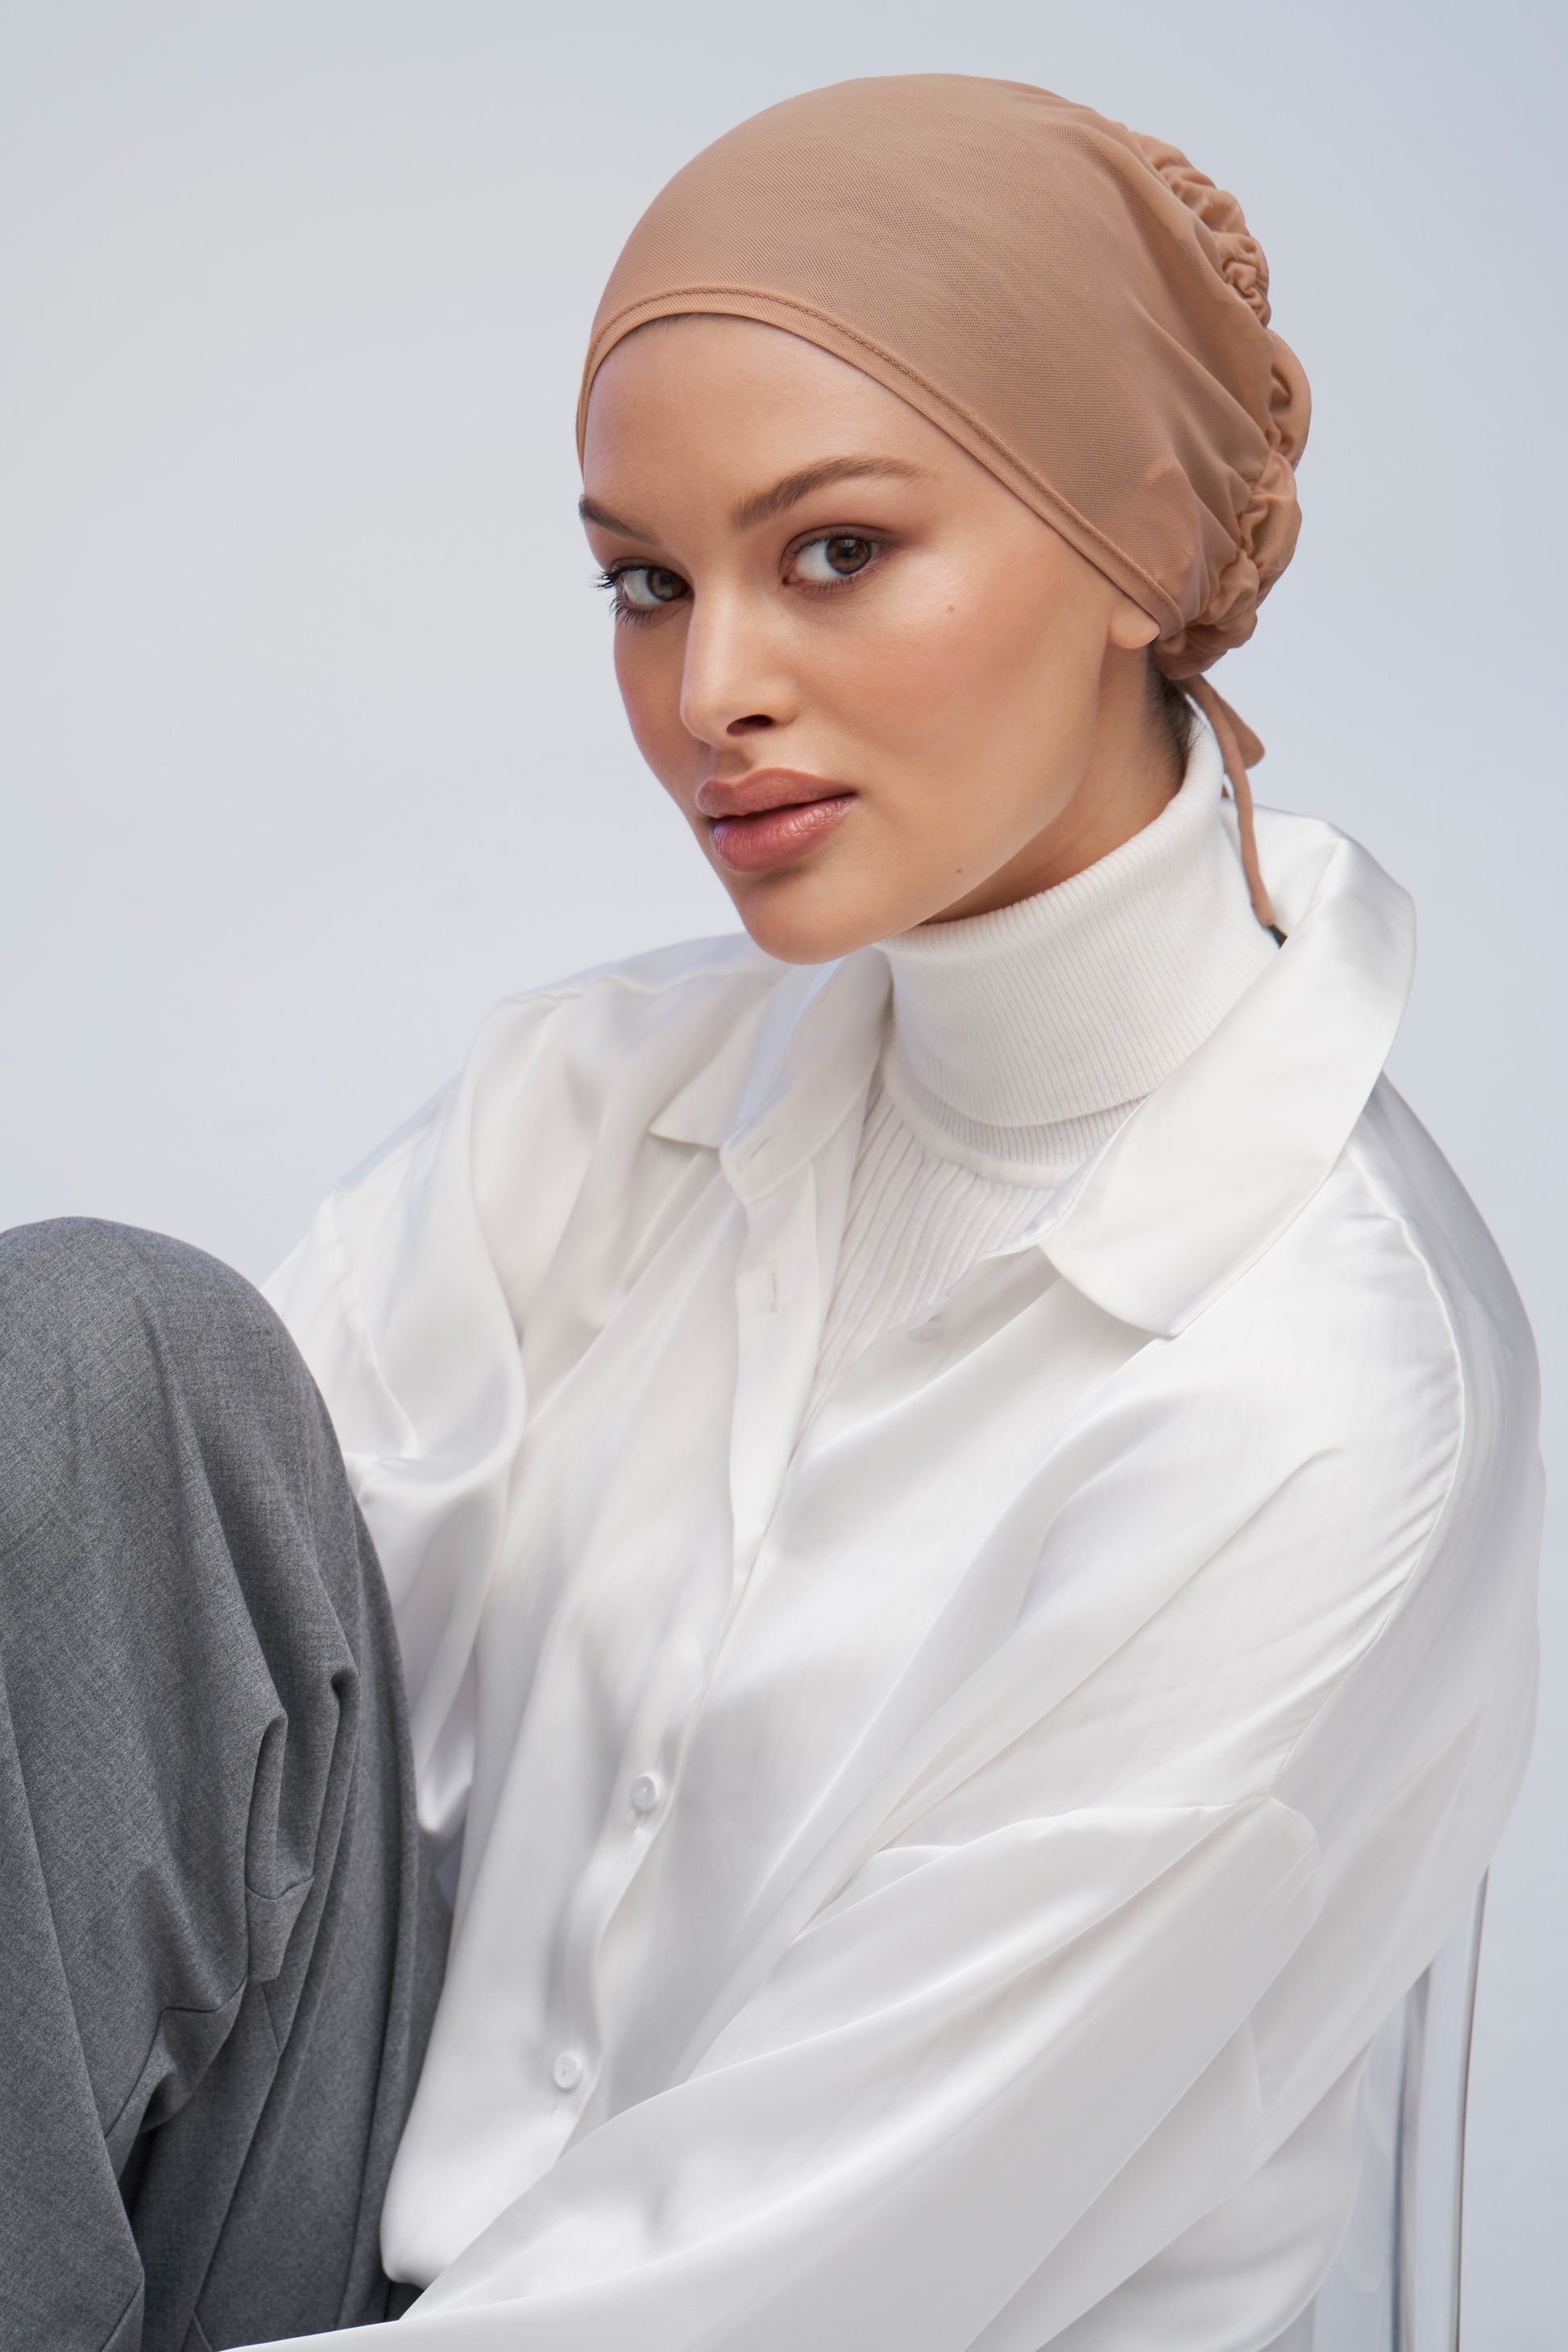 Hijab Undercaps for Muslim Women - Shop Now